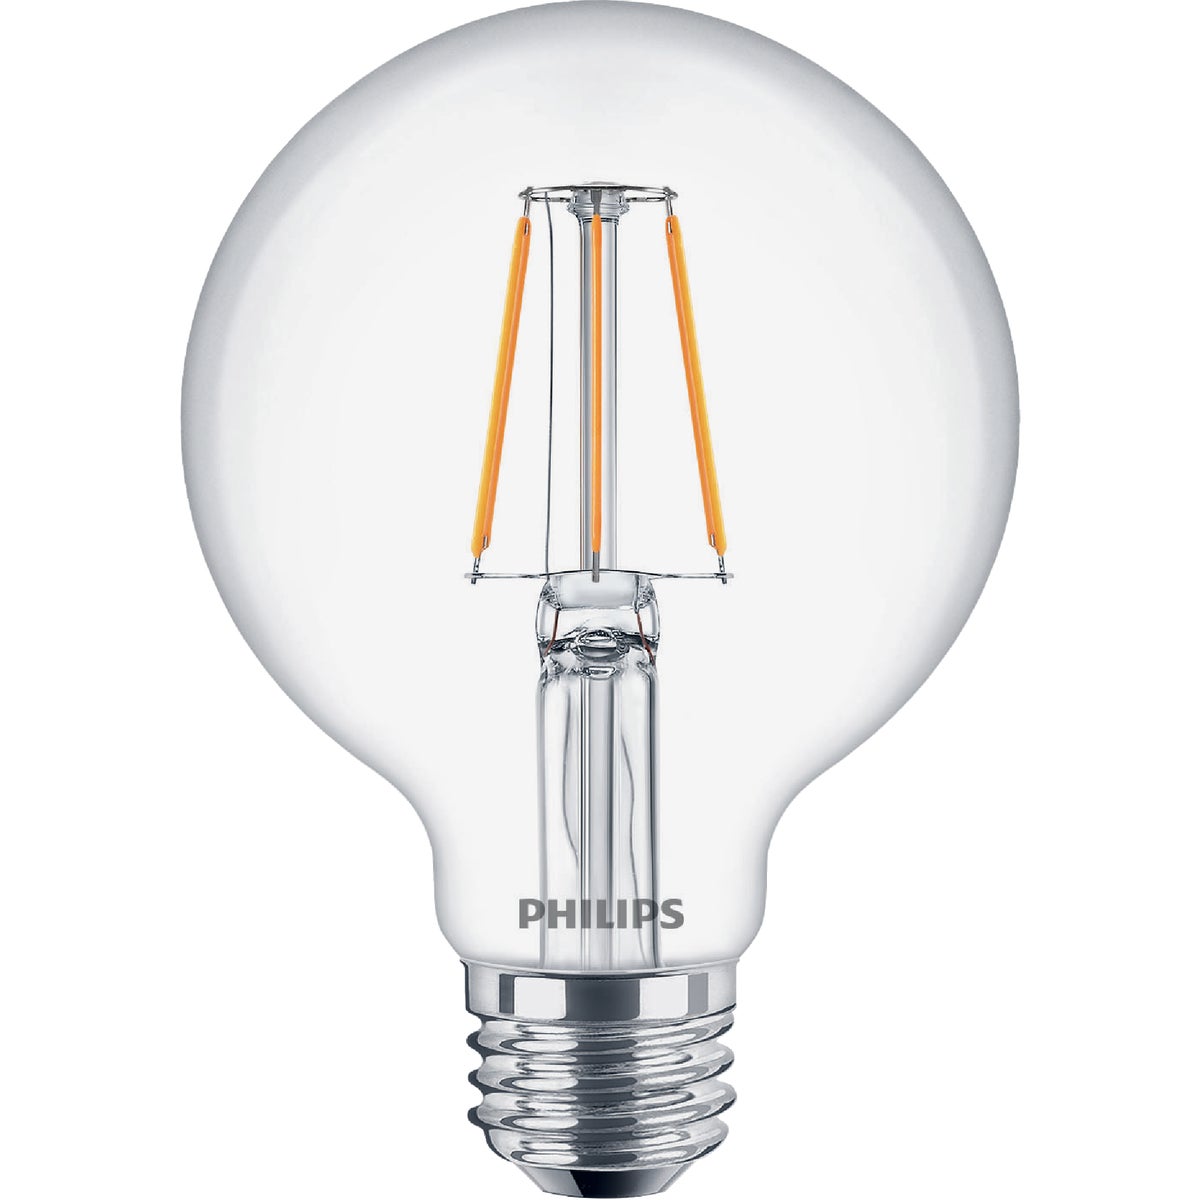 Item 502733, LED (light emitting diode) globe light bulb with a medium base.